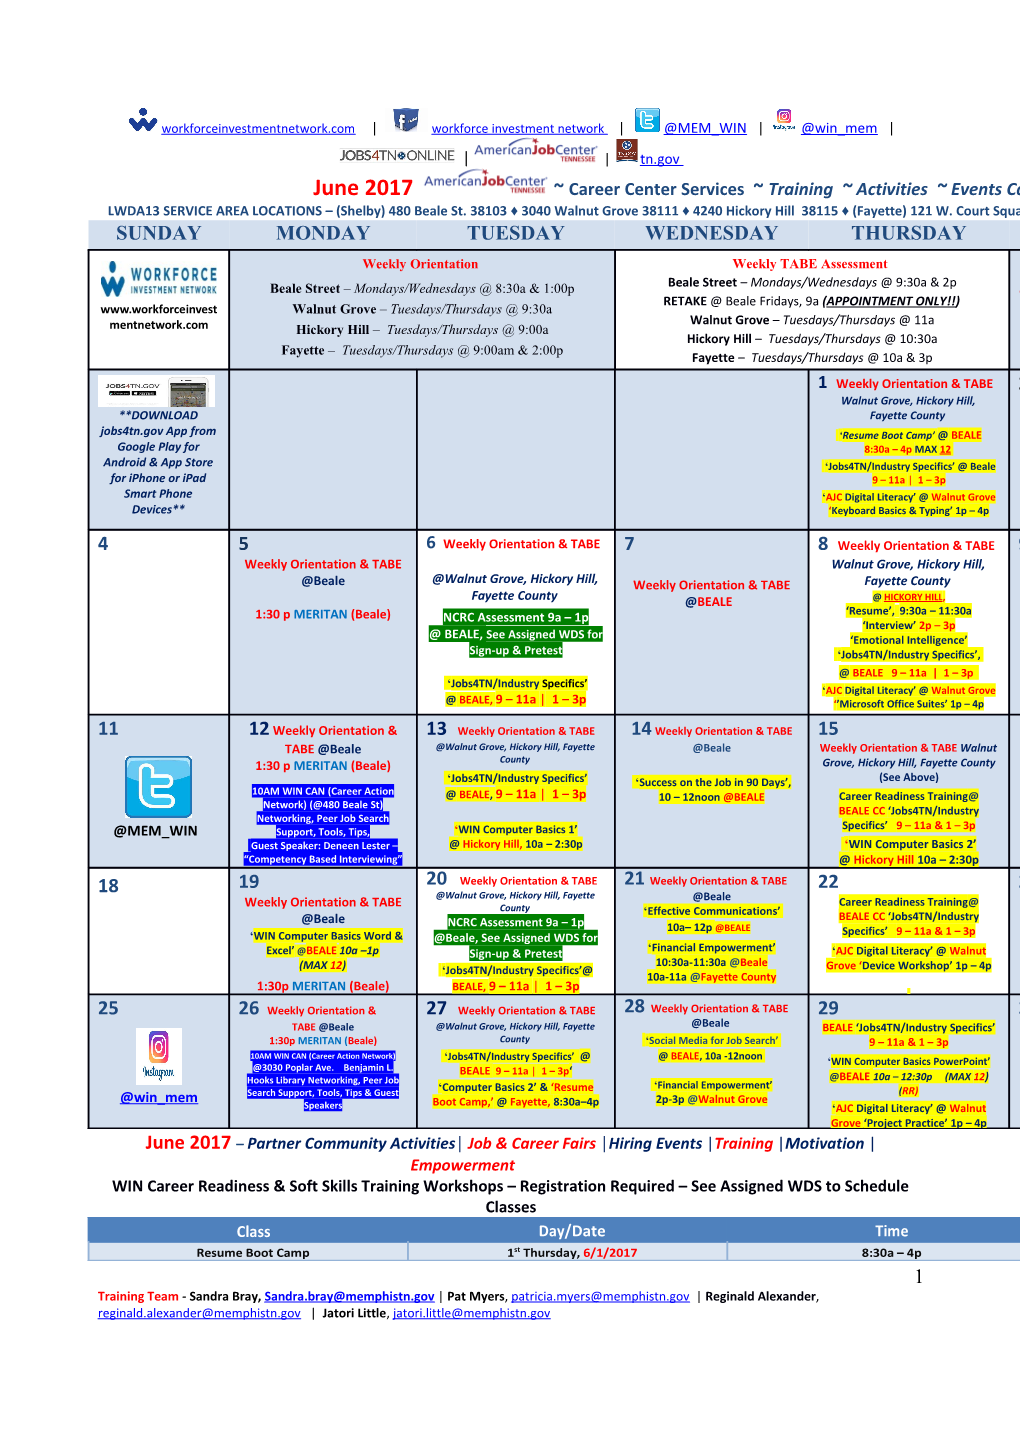 September 2012- Workshop Calendar TN Career Center (444 N